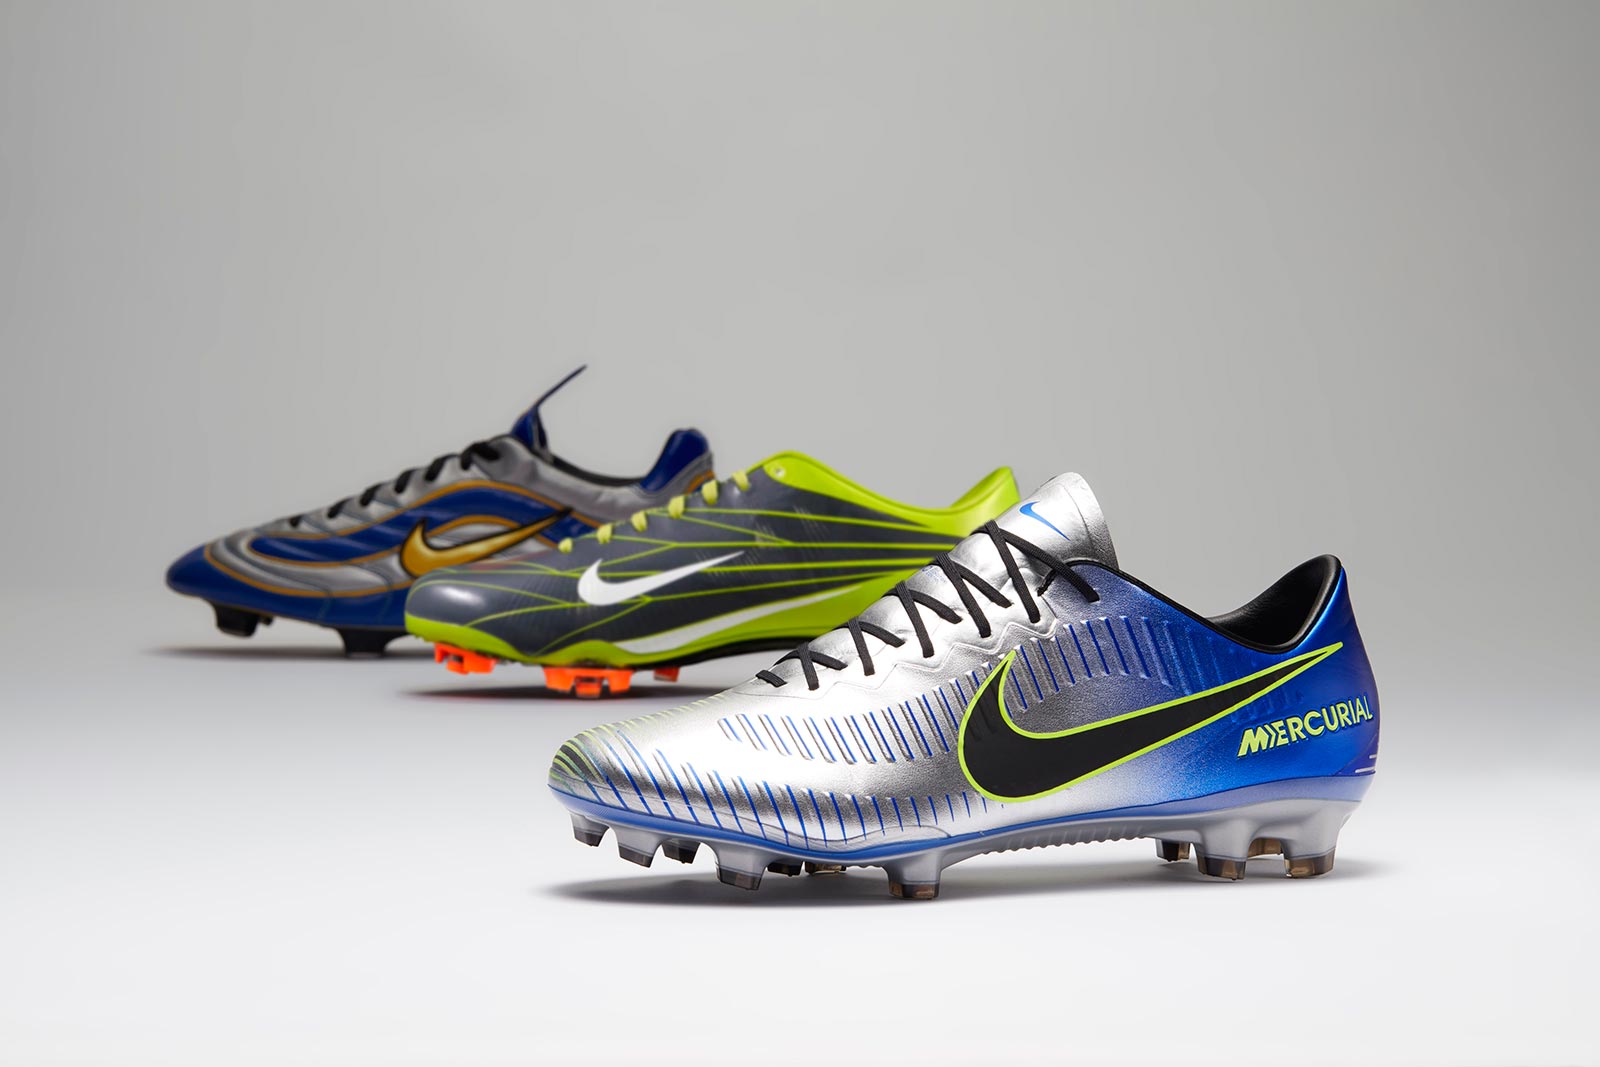 Nike Mercurial Puro Signature Released - Footy Headlines